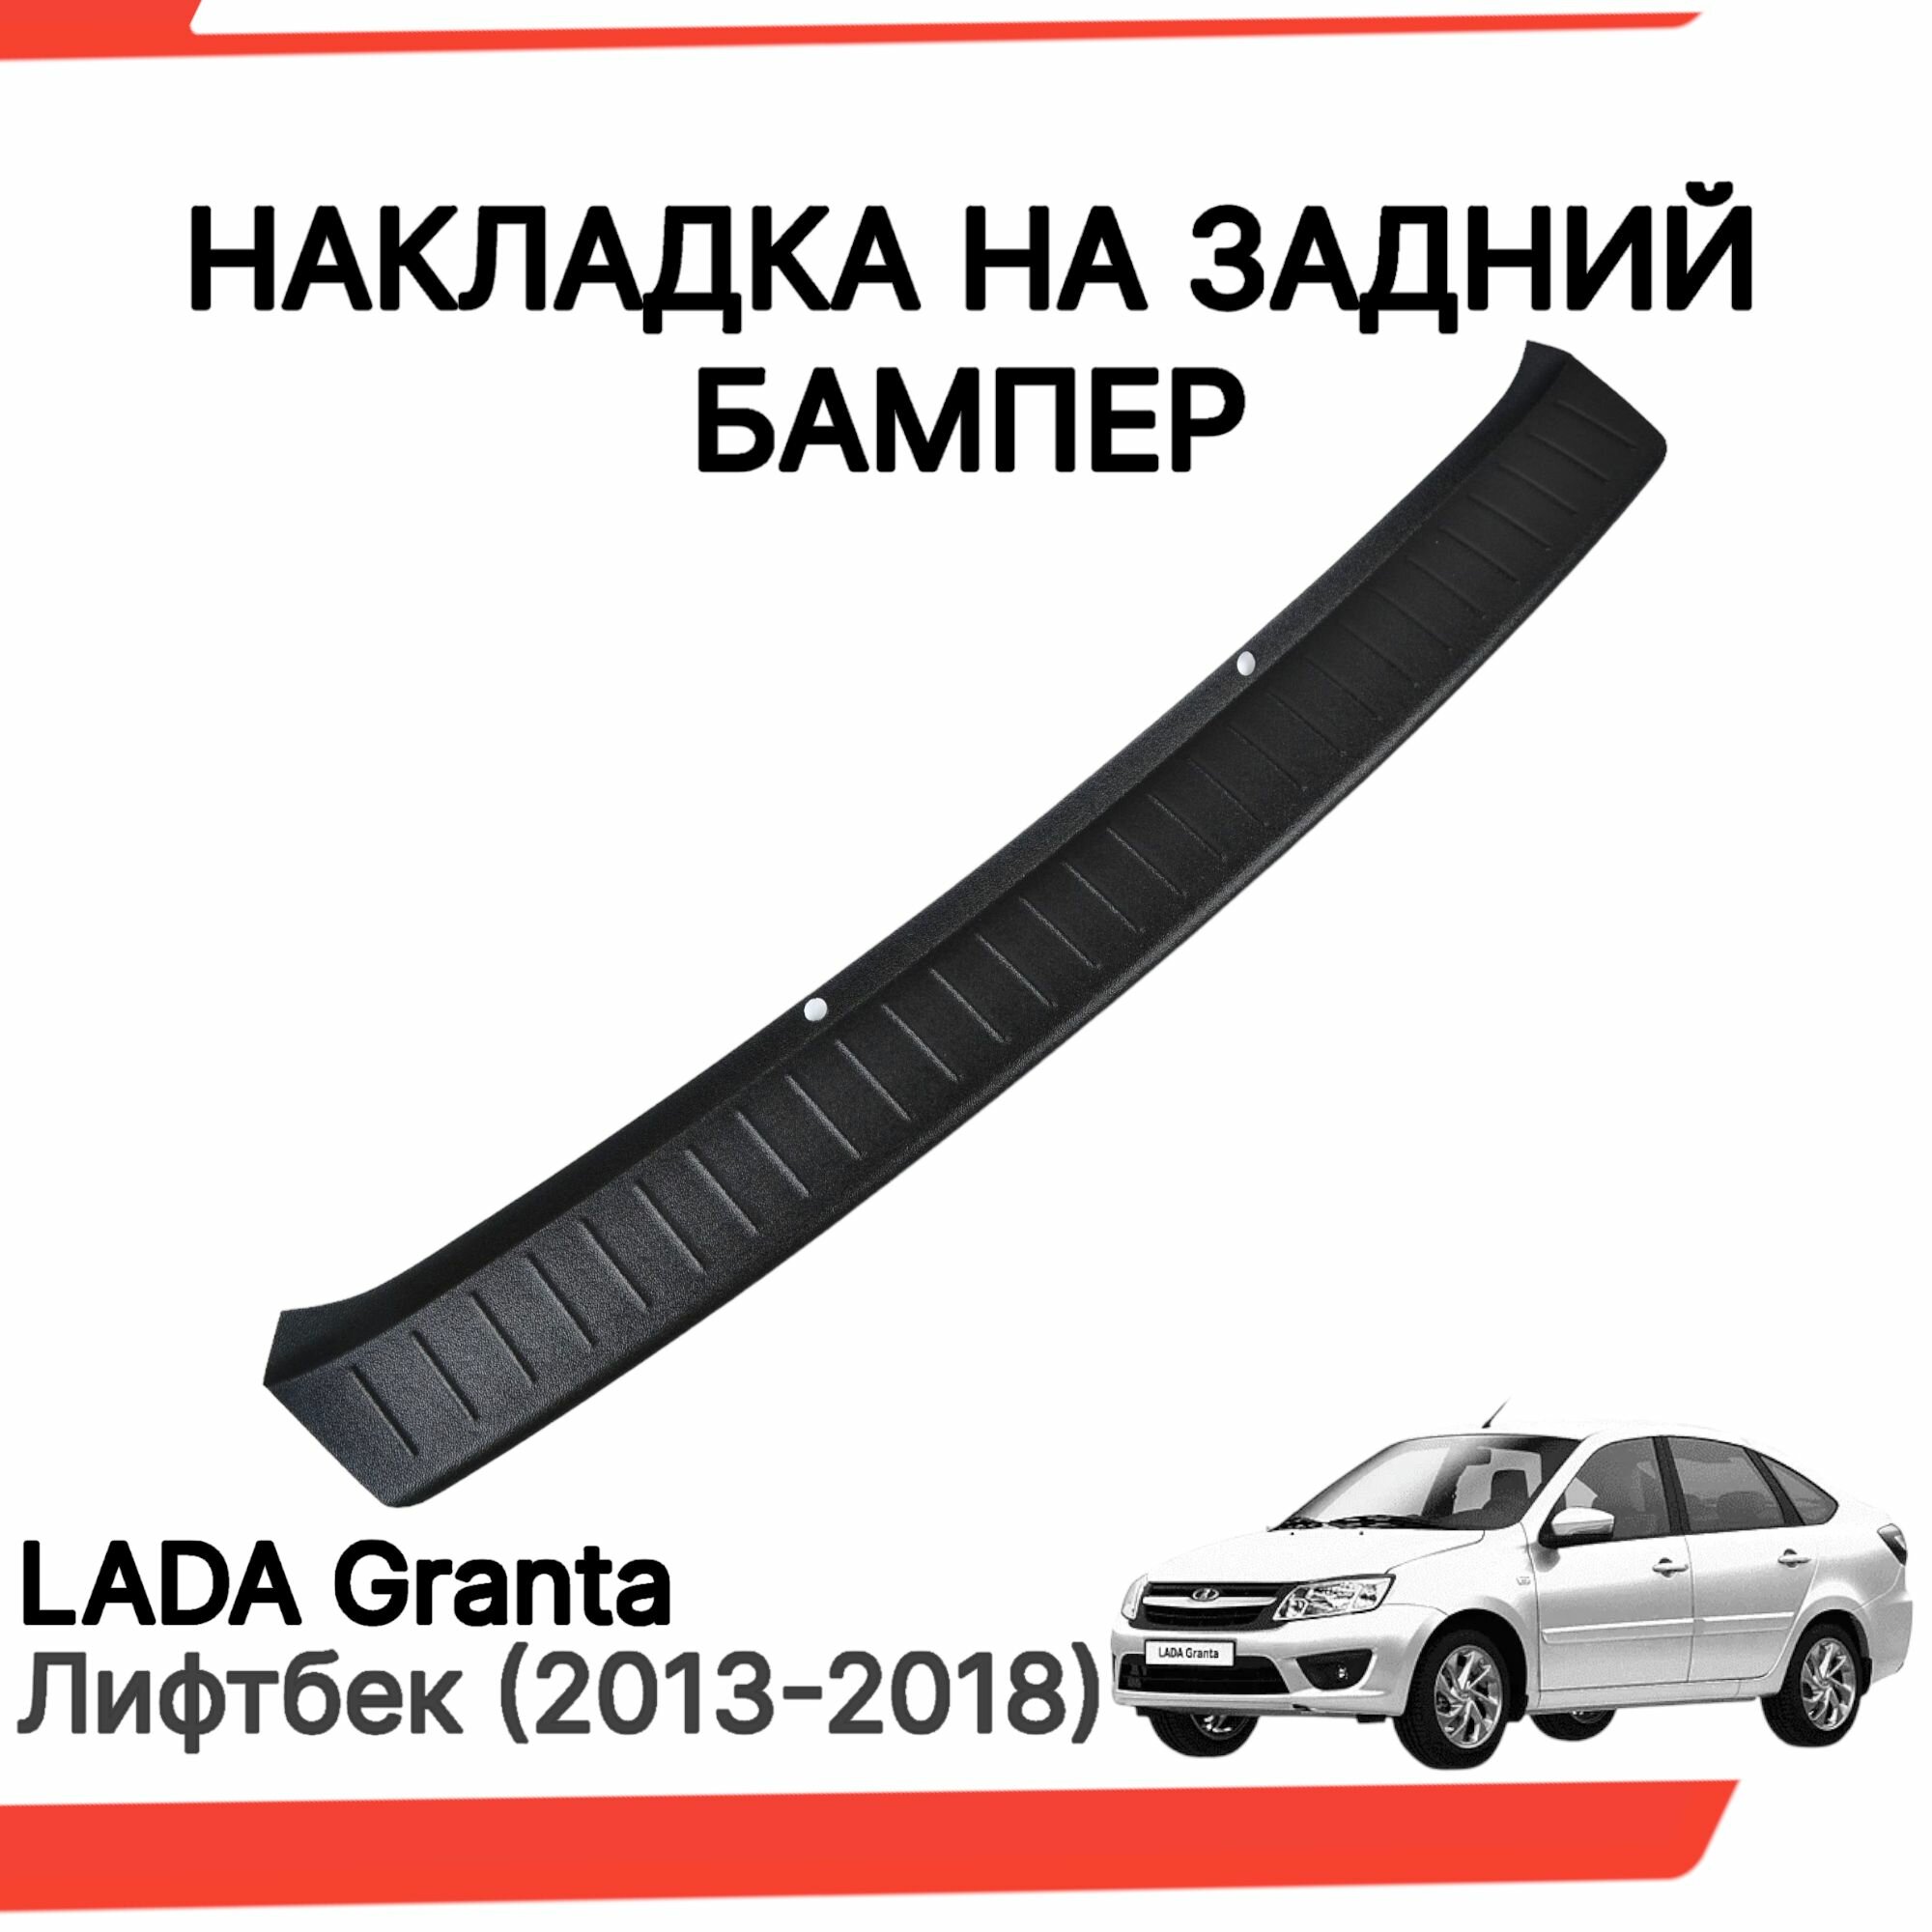 Накладка на задний бампер Лада Гранта лифтбек (2013-2018 г. в) / Защита заднего бампера Lada Granta